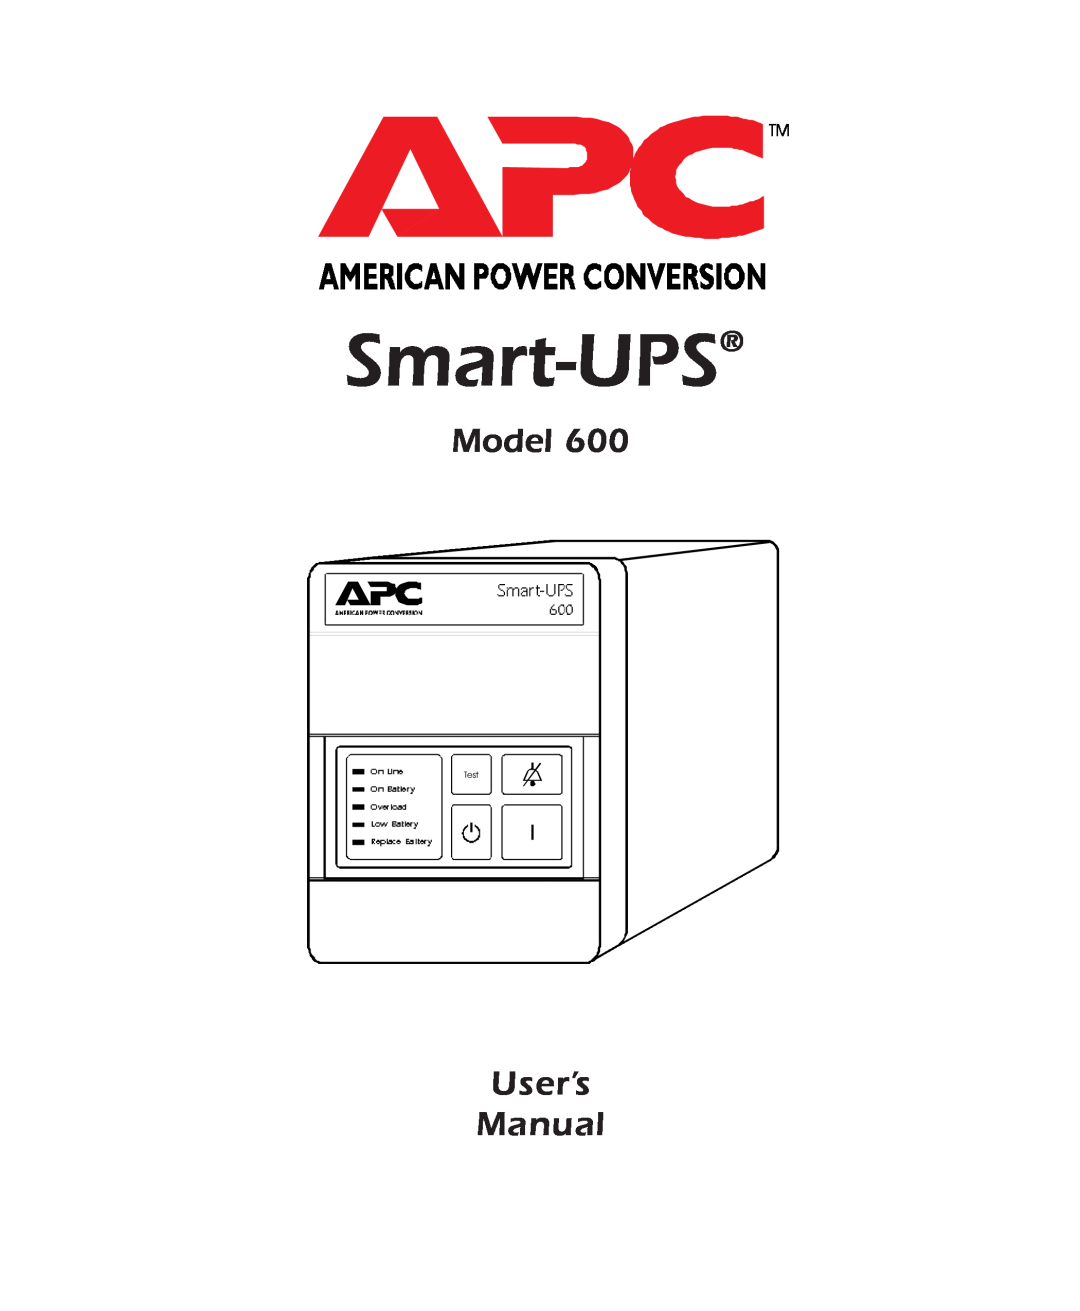 APC 600 user manual Smart-UPS, Model, Test 